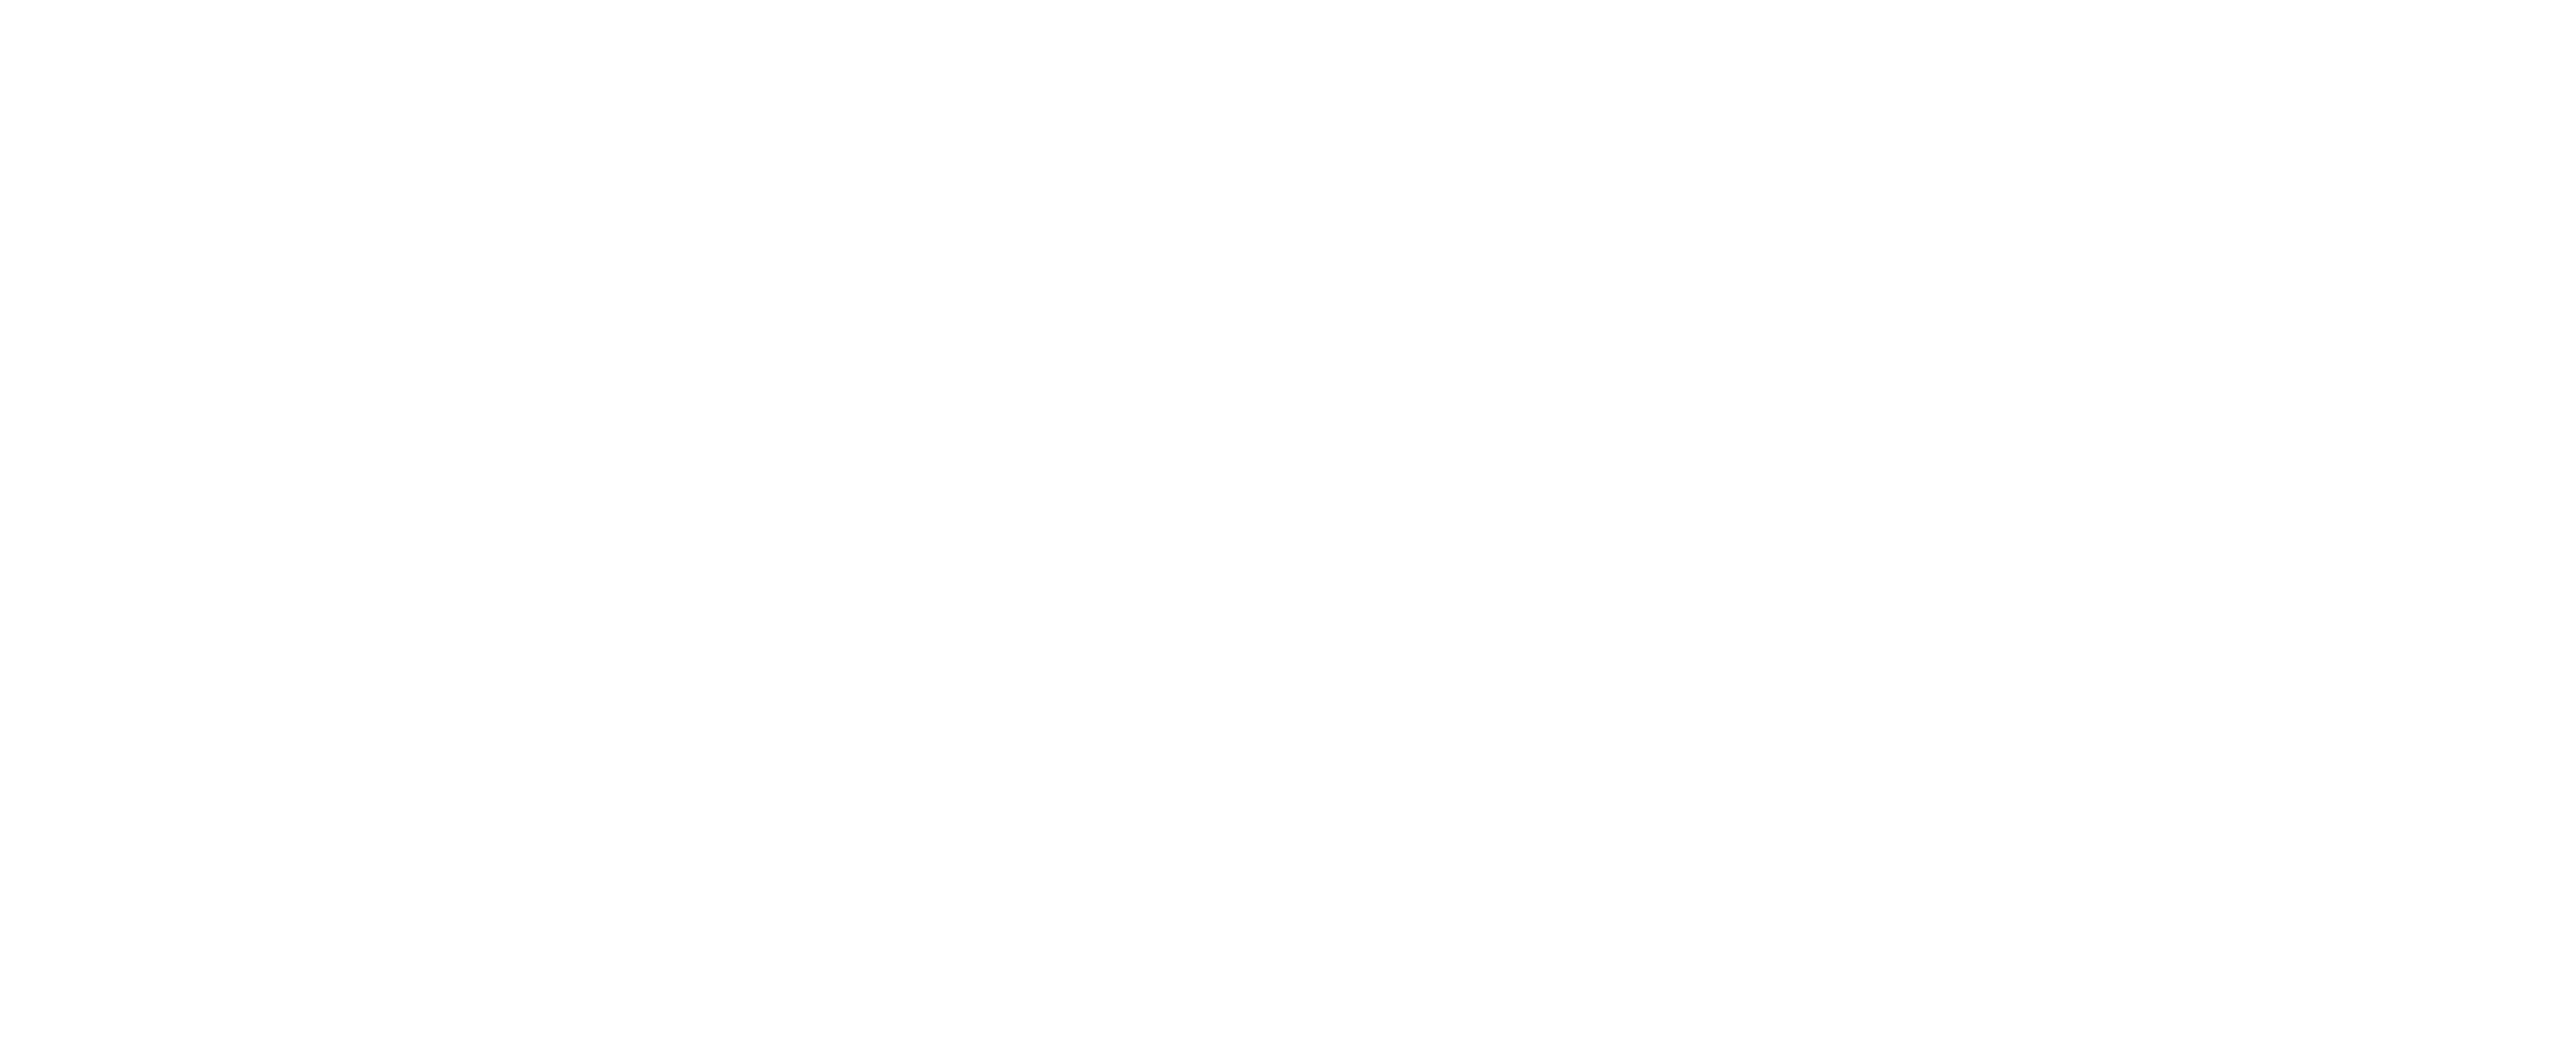 logo-metalco-prolians